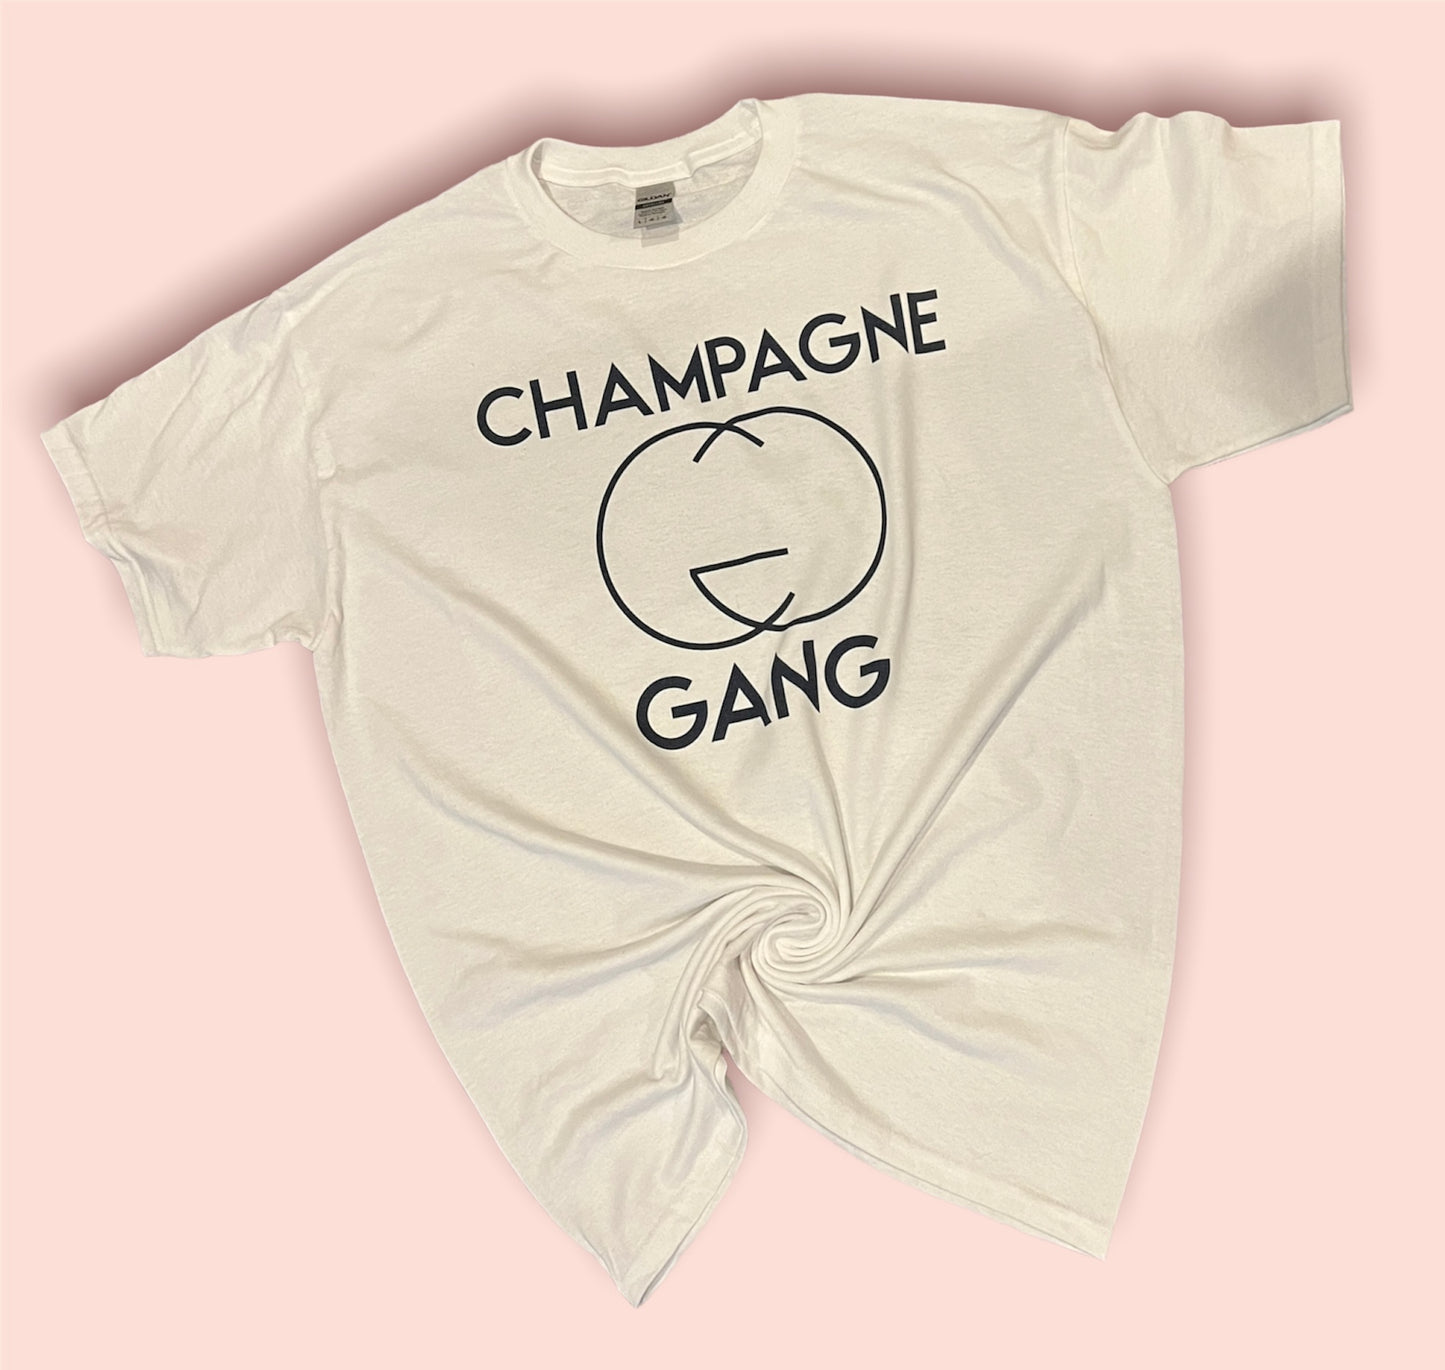 Champagne Gang tee